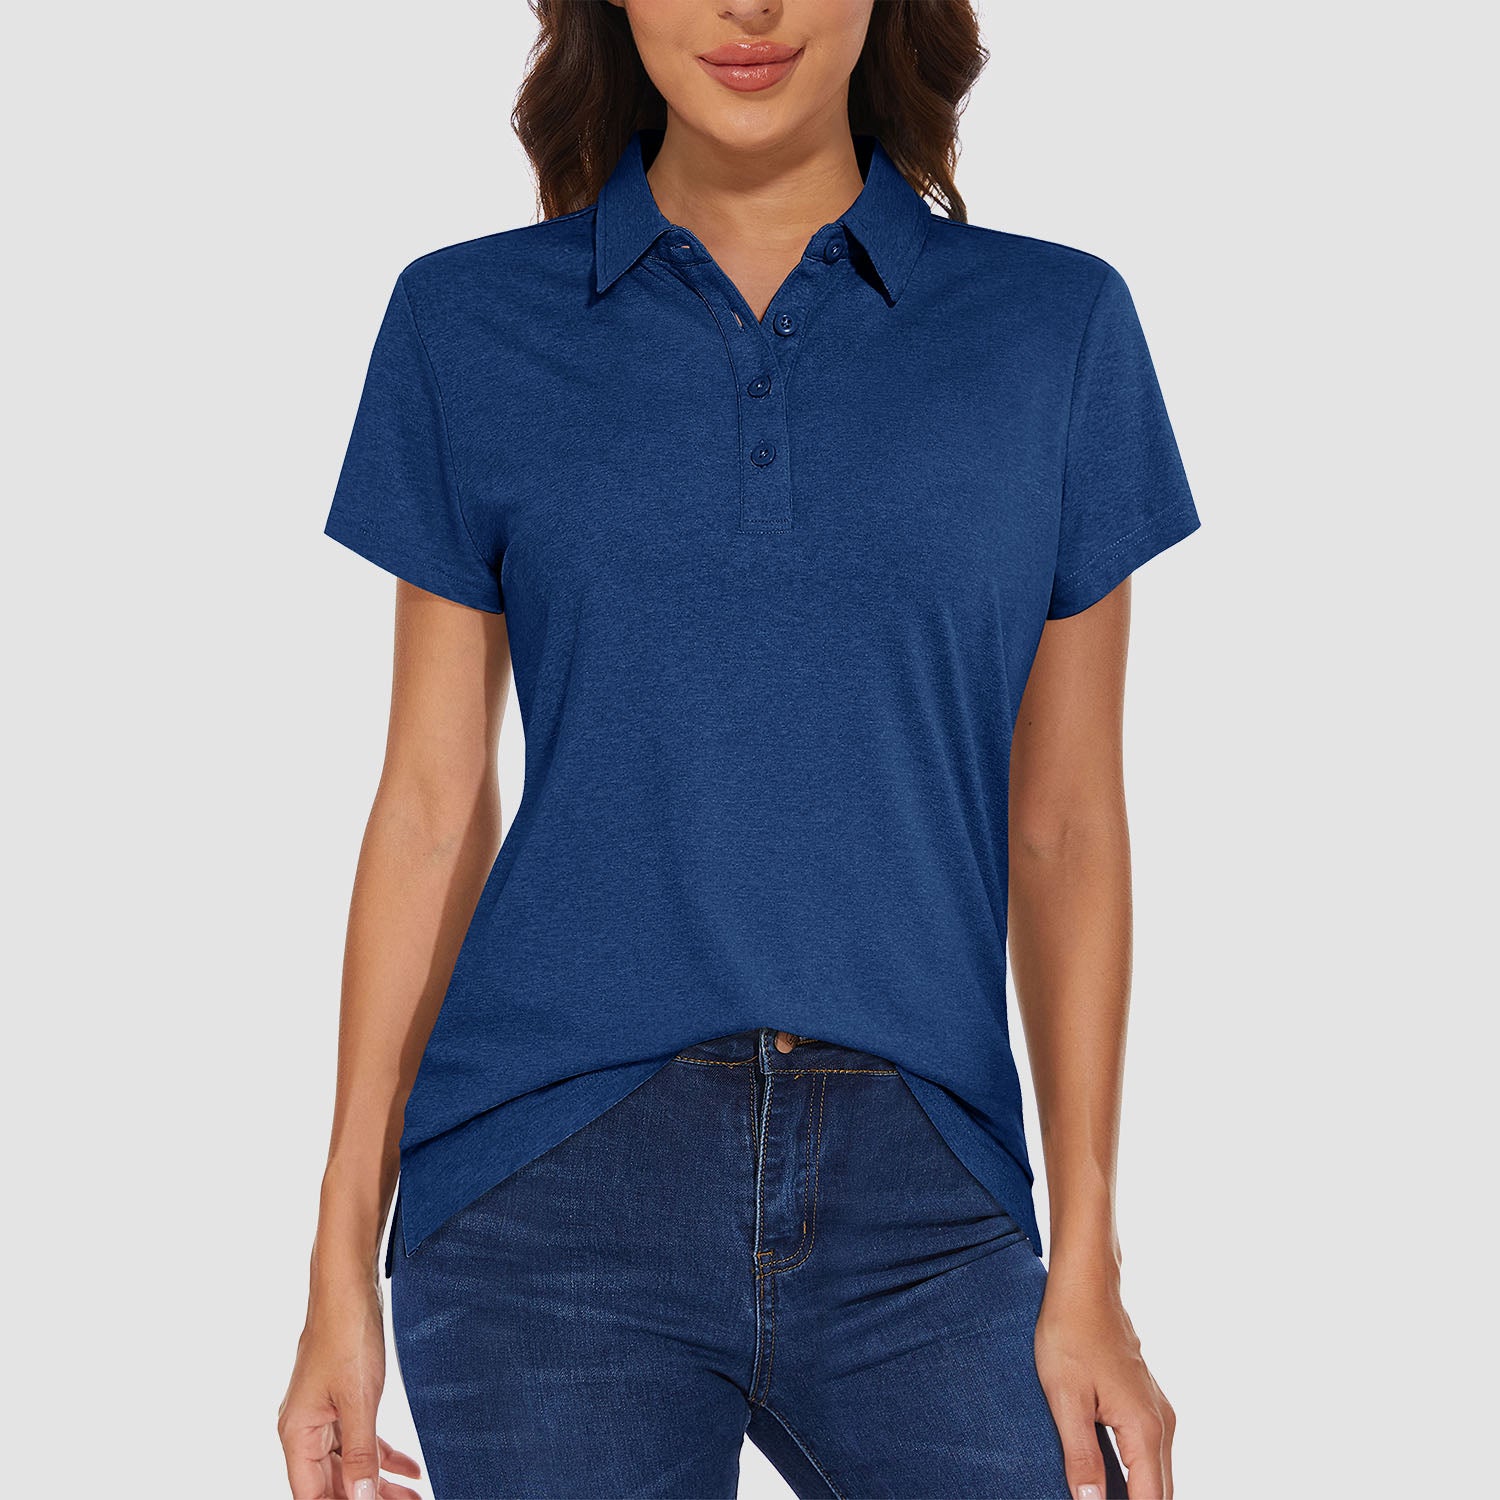 Women's Polo T-shirt 4 Buttons Casual T-Shirts Quick Dry Short Sleeve Golf Shirt